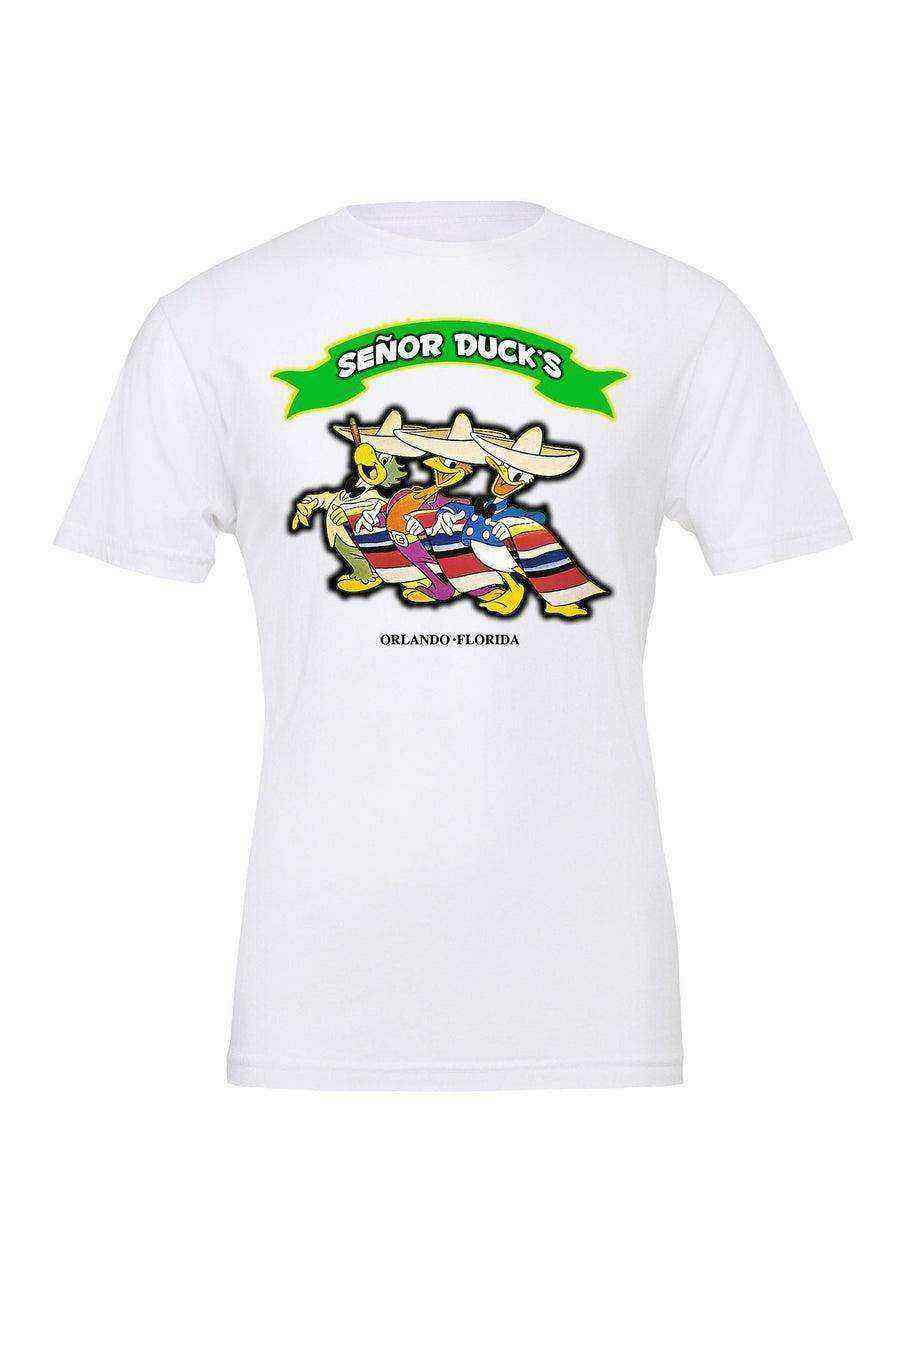 Toddler | Señor Ducks Shirt | World Spring Break Shirt | Senor Frogs | The Three Caballeros Shirt - Dylan's Tees